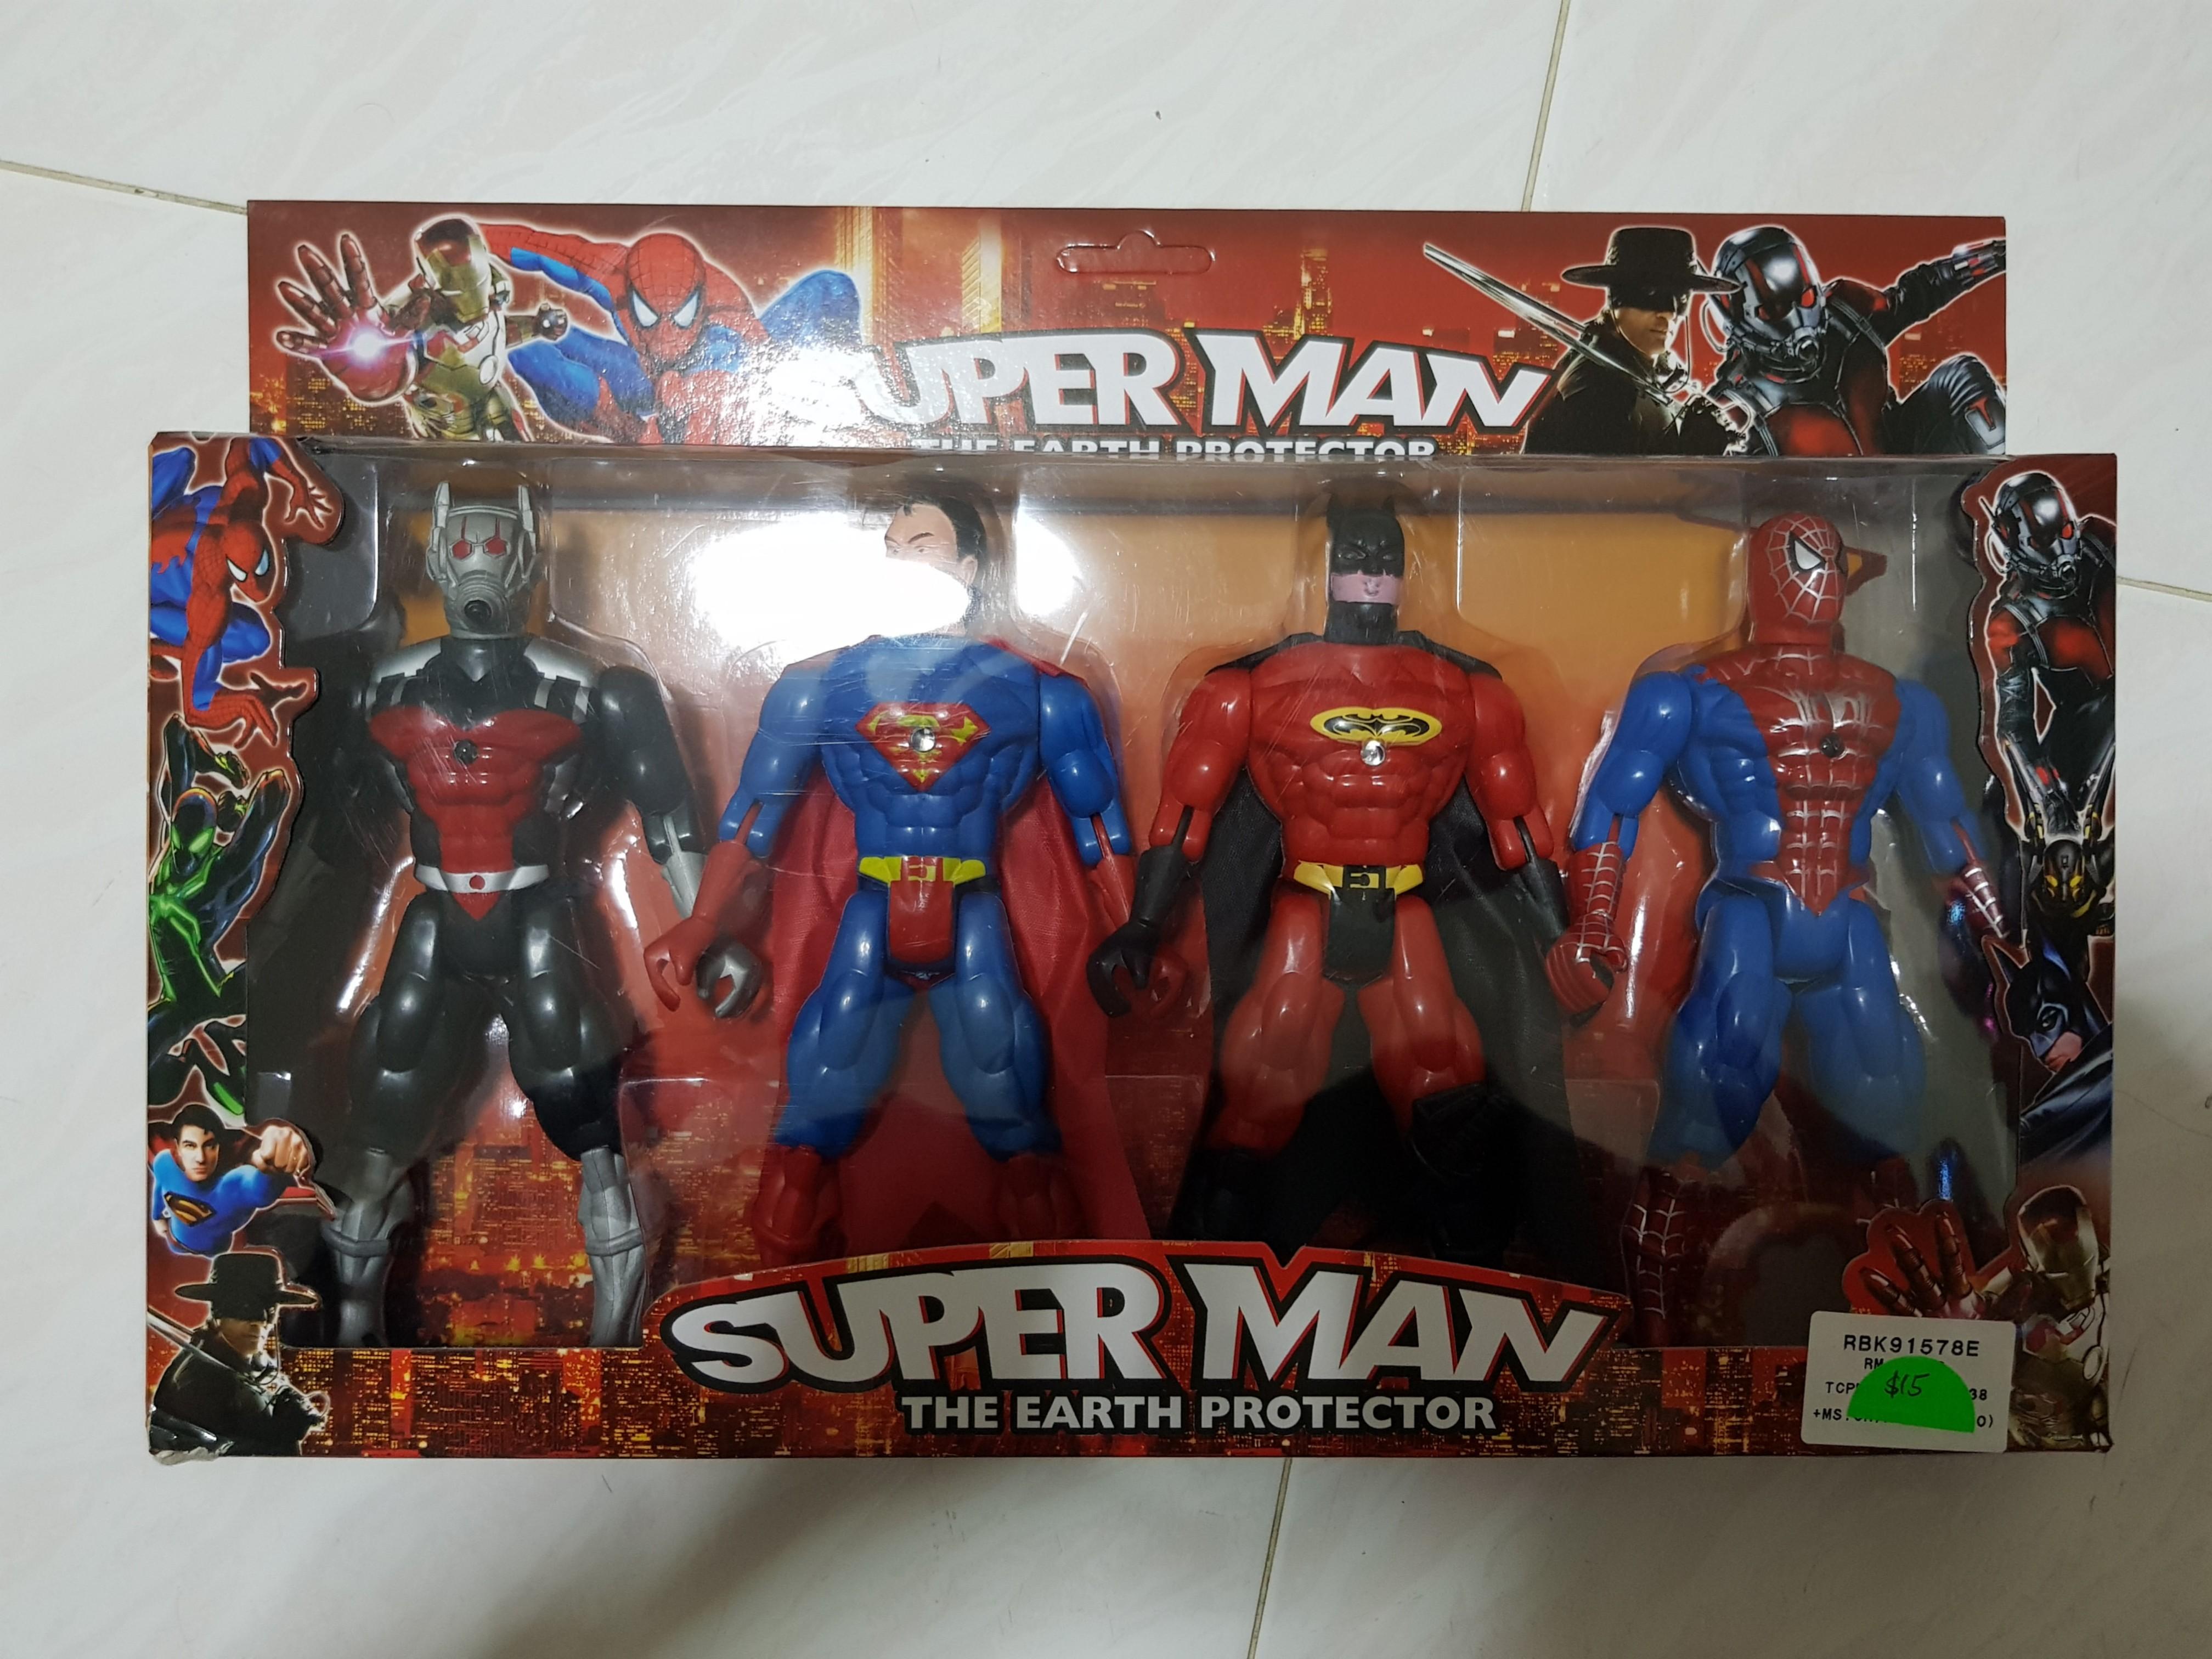 batman and spiderman action figures